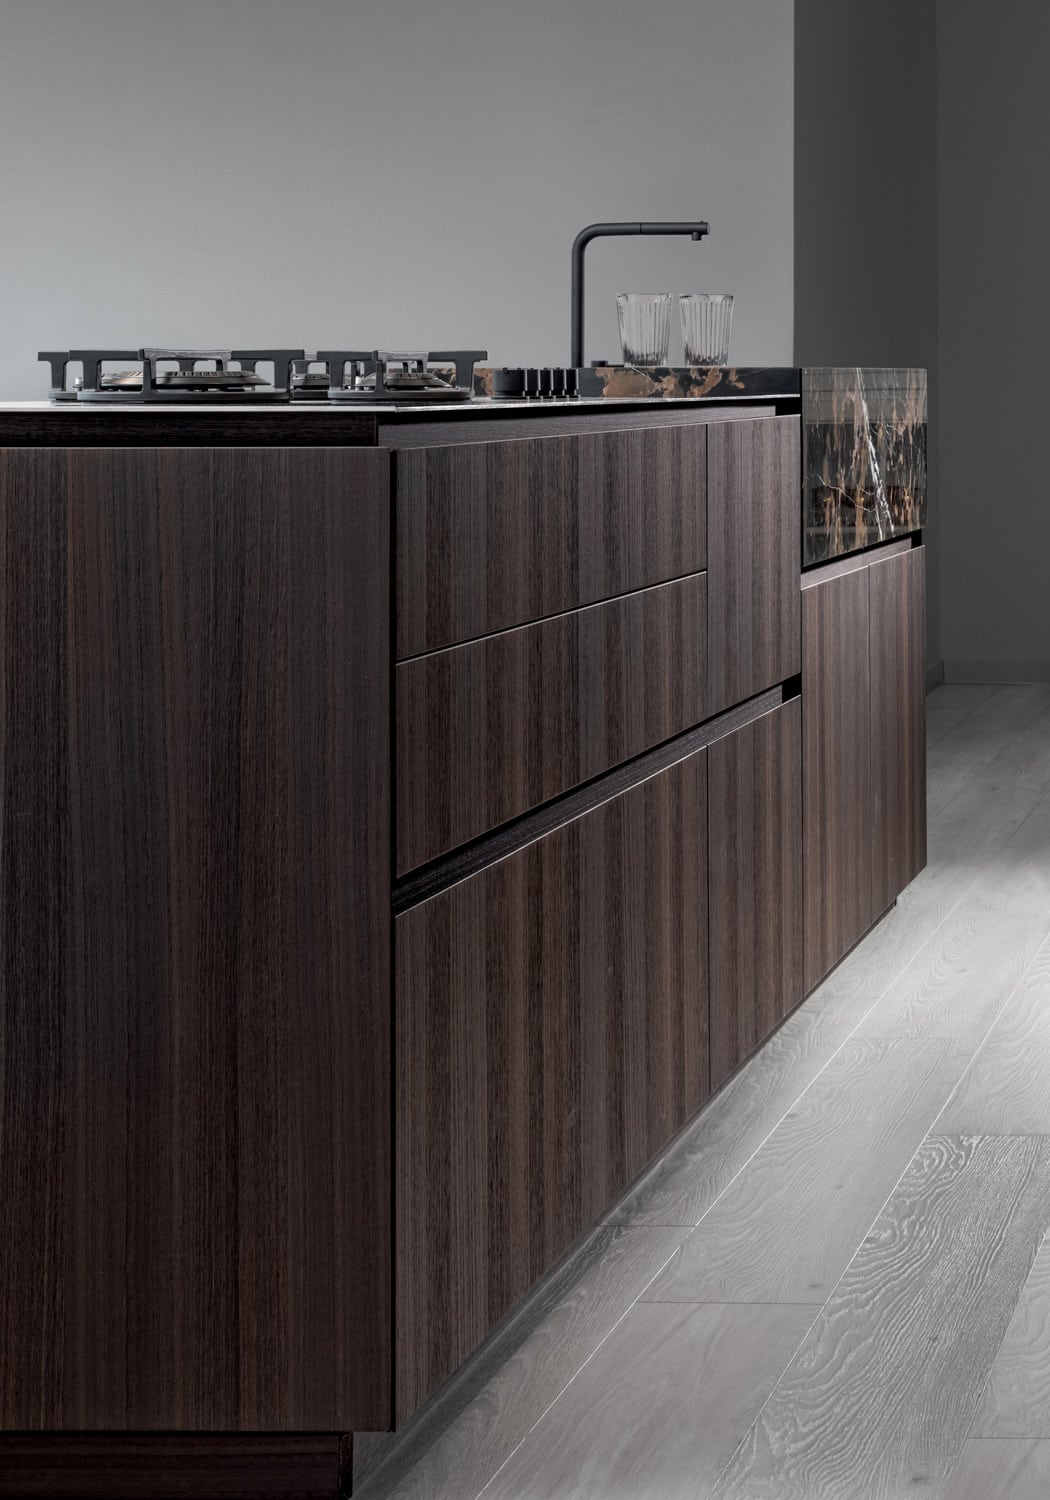 The Smoked Eucalyptus finish wraps the kitchen island with its elegant wood grain pattern.